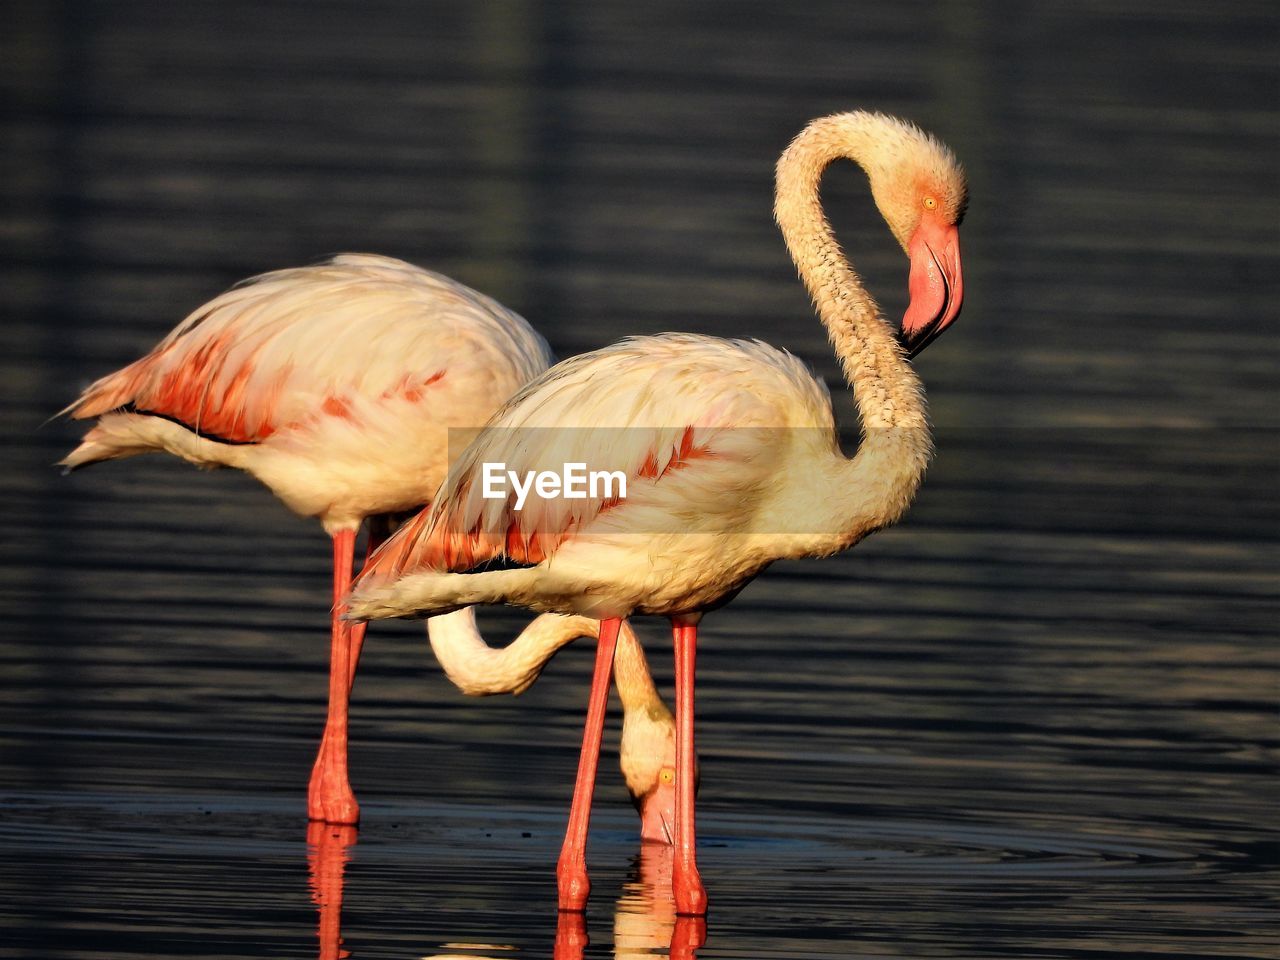 Greater flamingos 